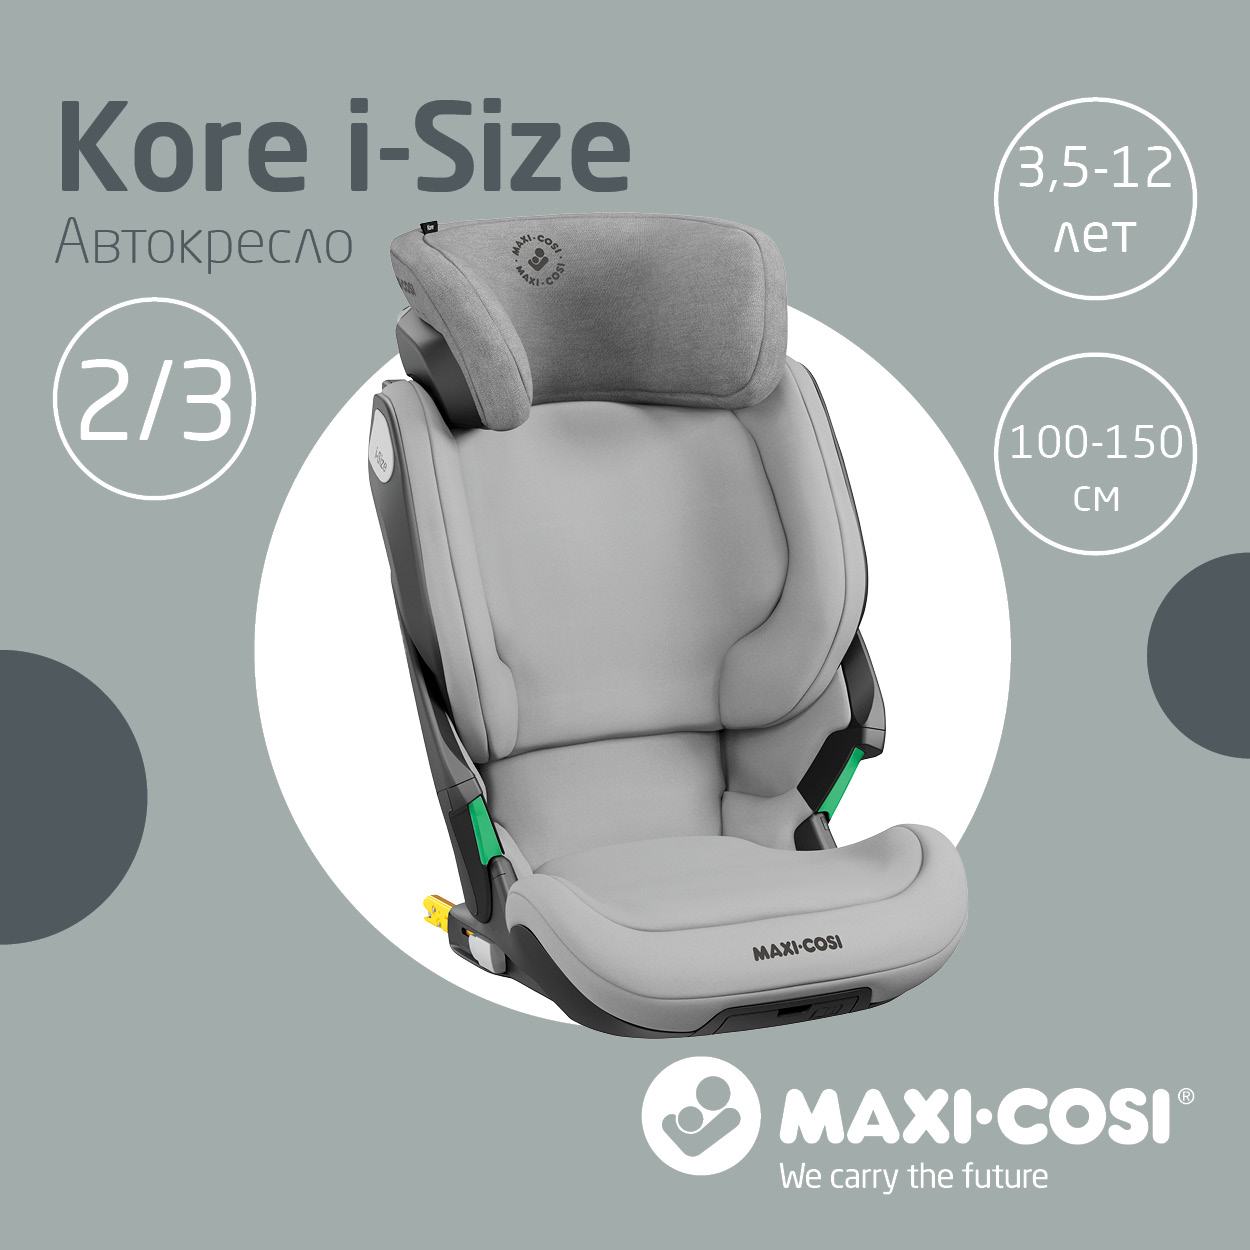 Автокресло Maxi-Cosi Kore i-Size 15-36 кг Authentic Grey Серый автокресло maxi cosi kore pro i size 15 36 кг authentic grey серый